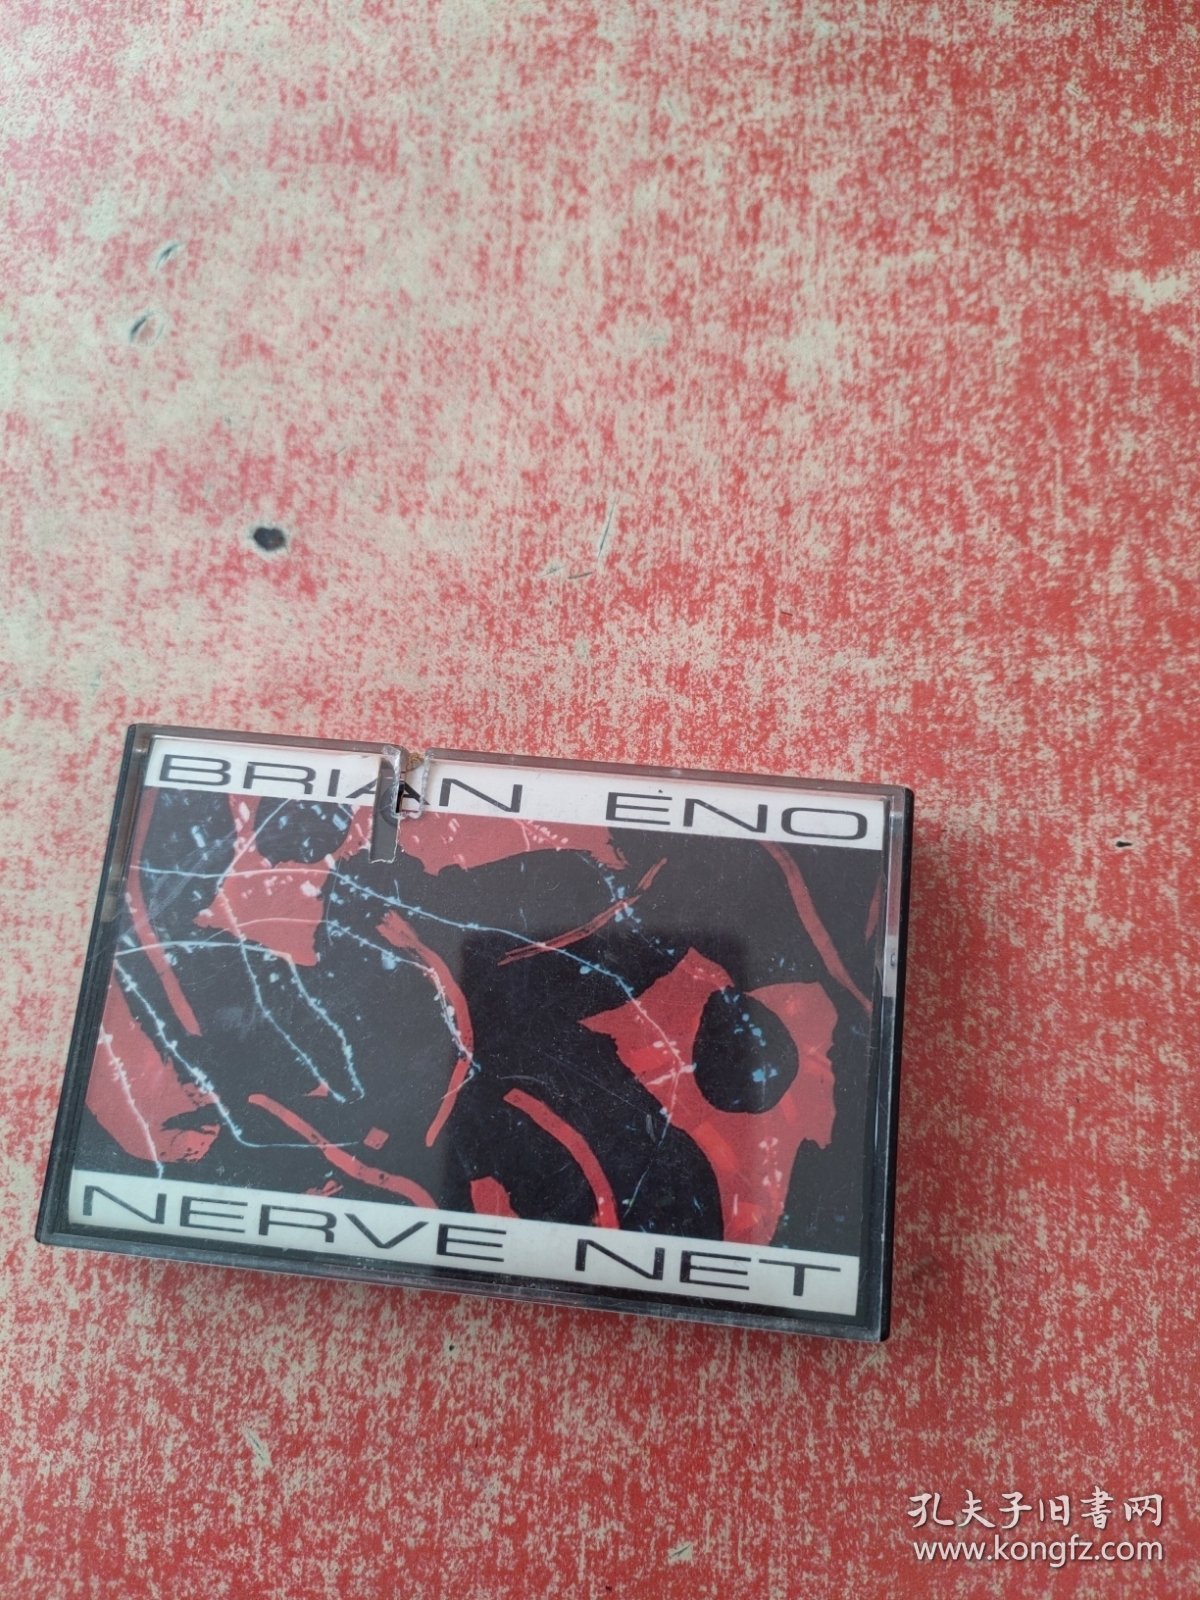 磁带：BRIAN ENO NERVE NET（锯口带）